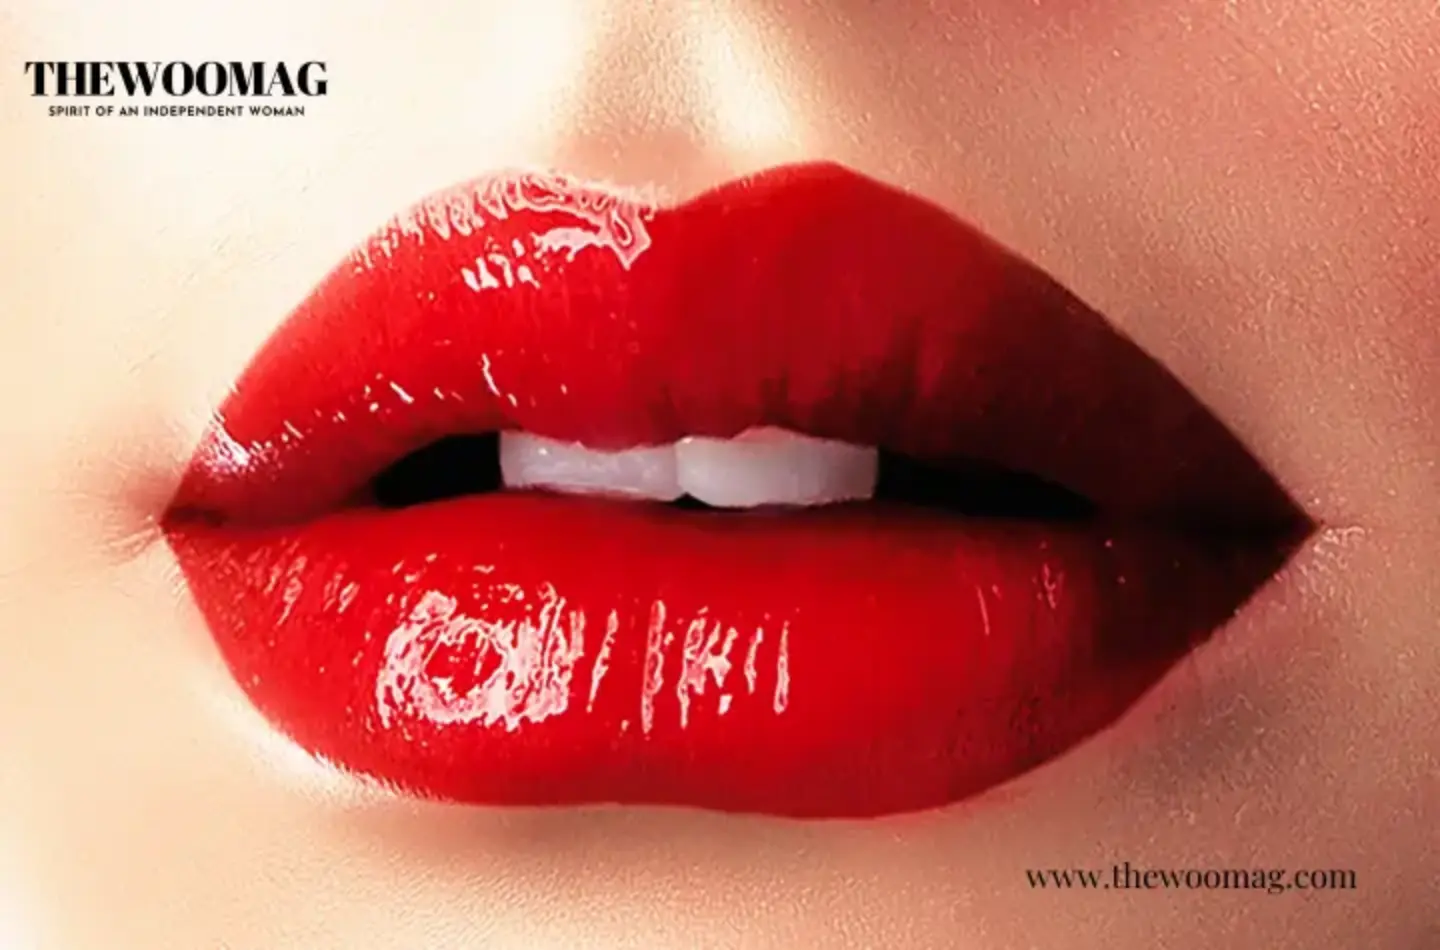 Fuller Lips - How to Make Lips Bigger, fuller with makeup